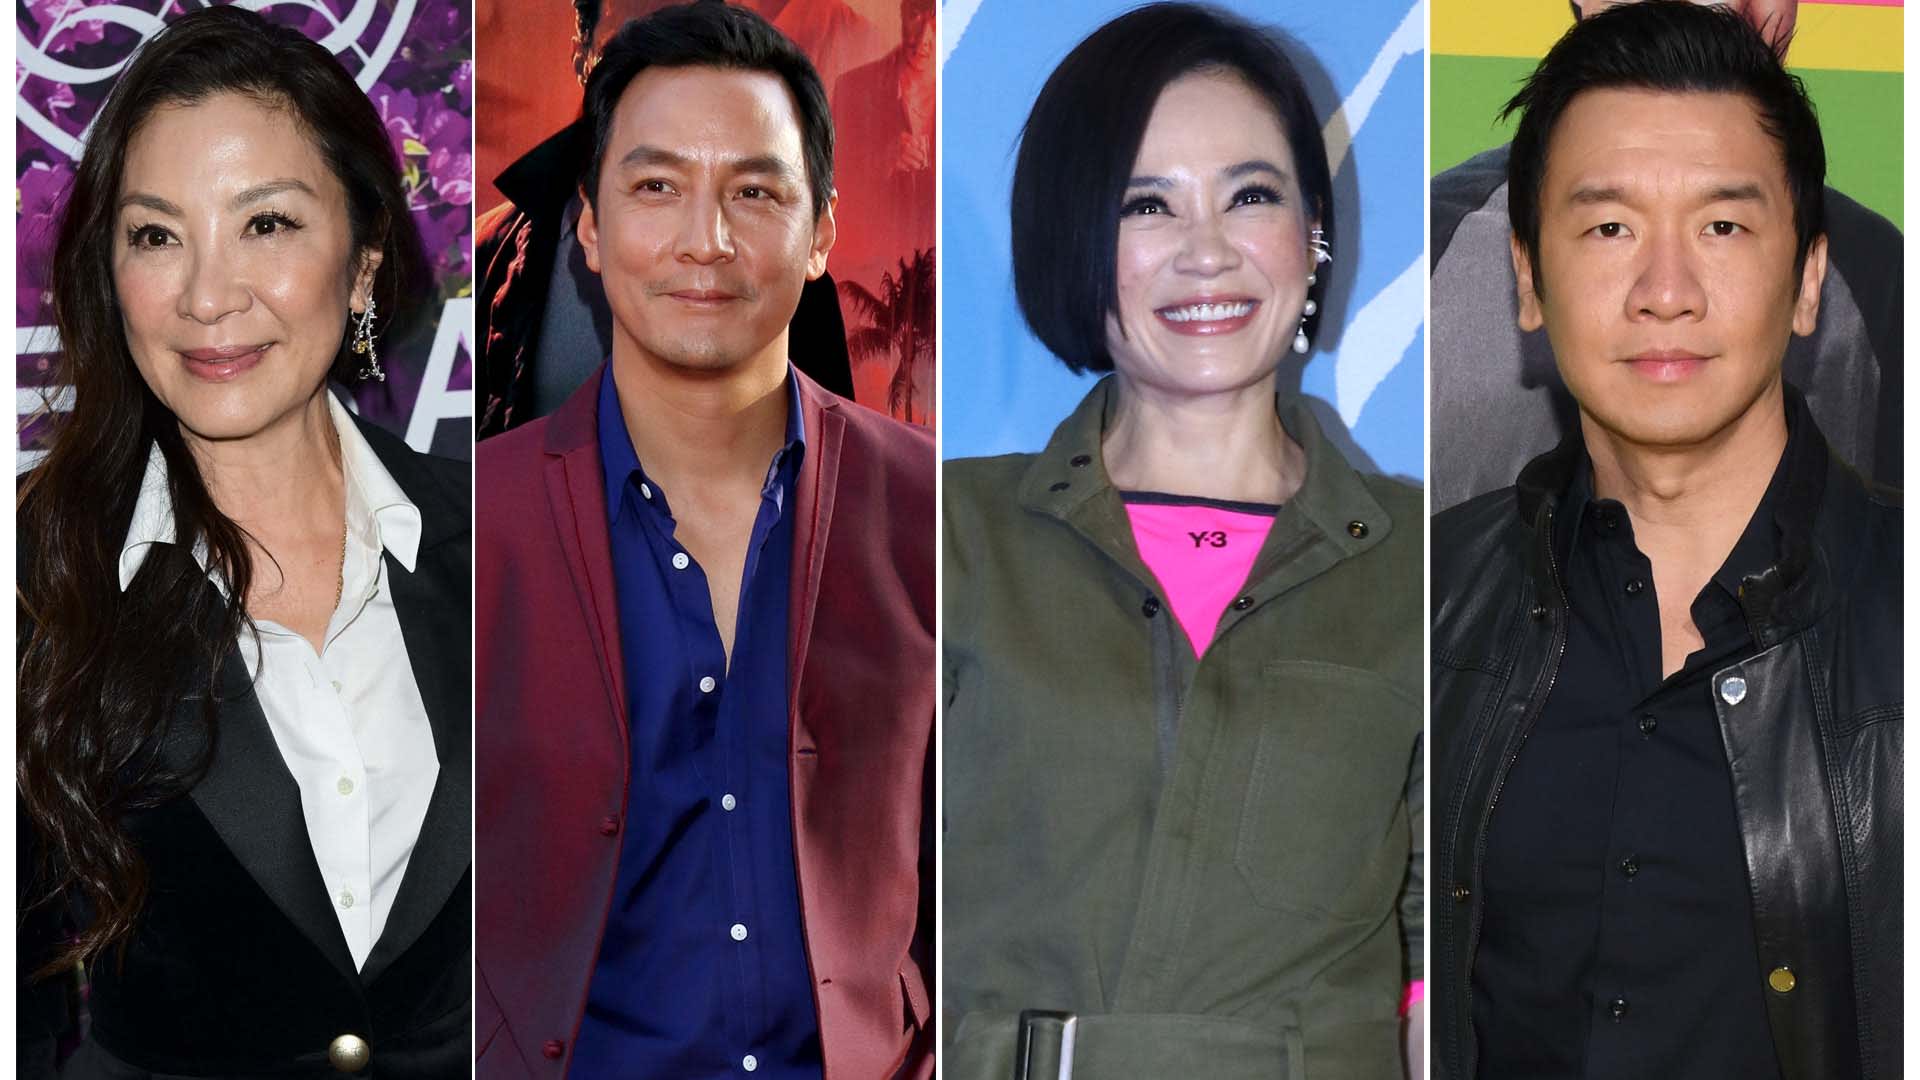 Michelle Yeoh, Daniel Wu, Yeo Yann Yann, Chin Han To Star In Disney+ Series From Shang-Chi Director